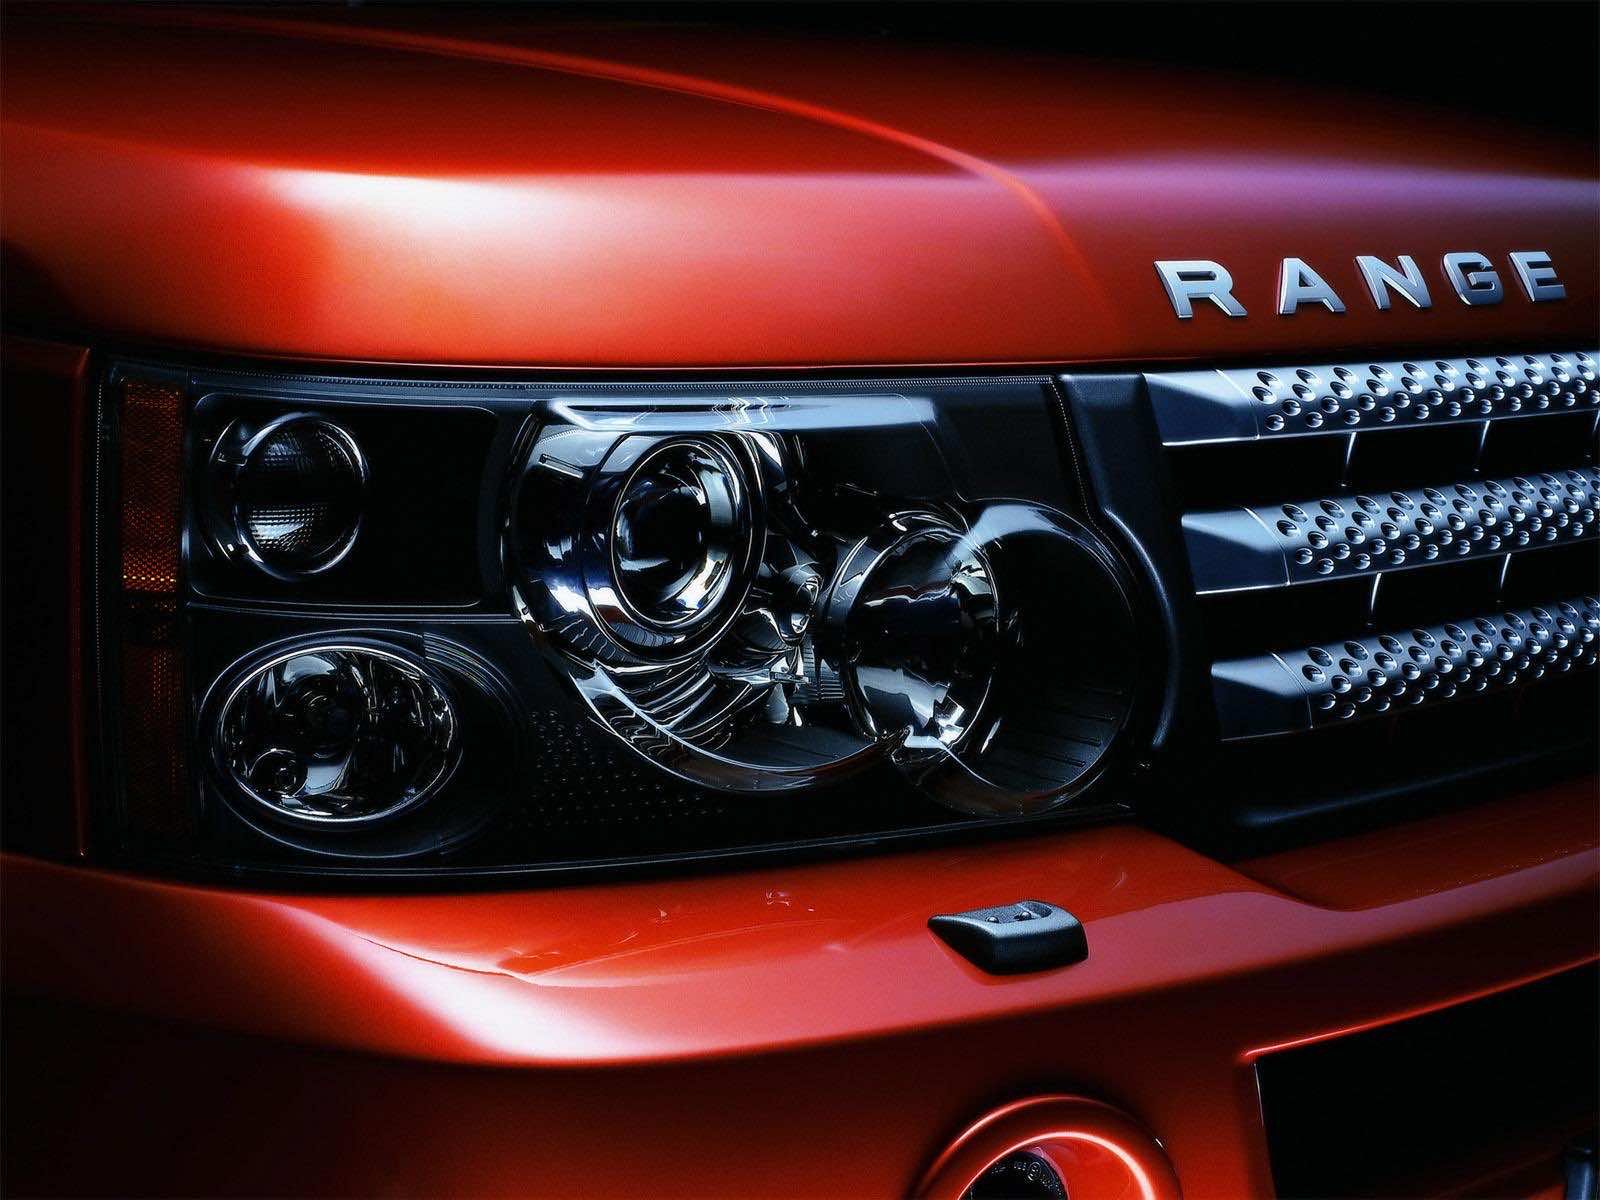 Range Rover Car Images Hd Download